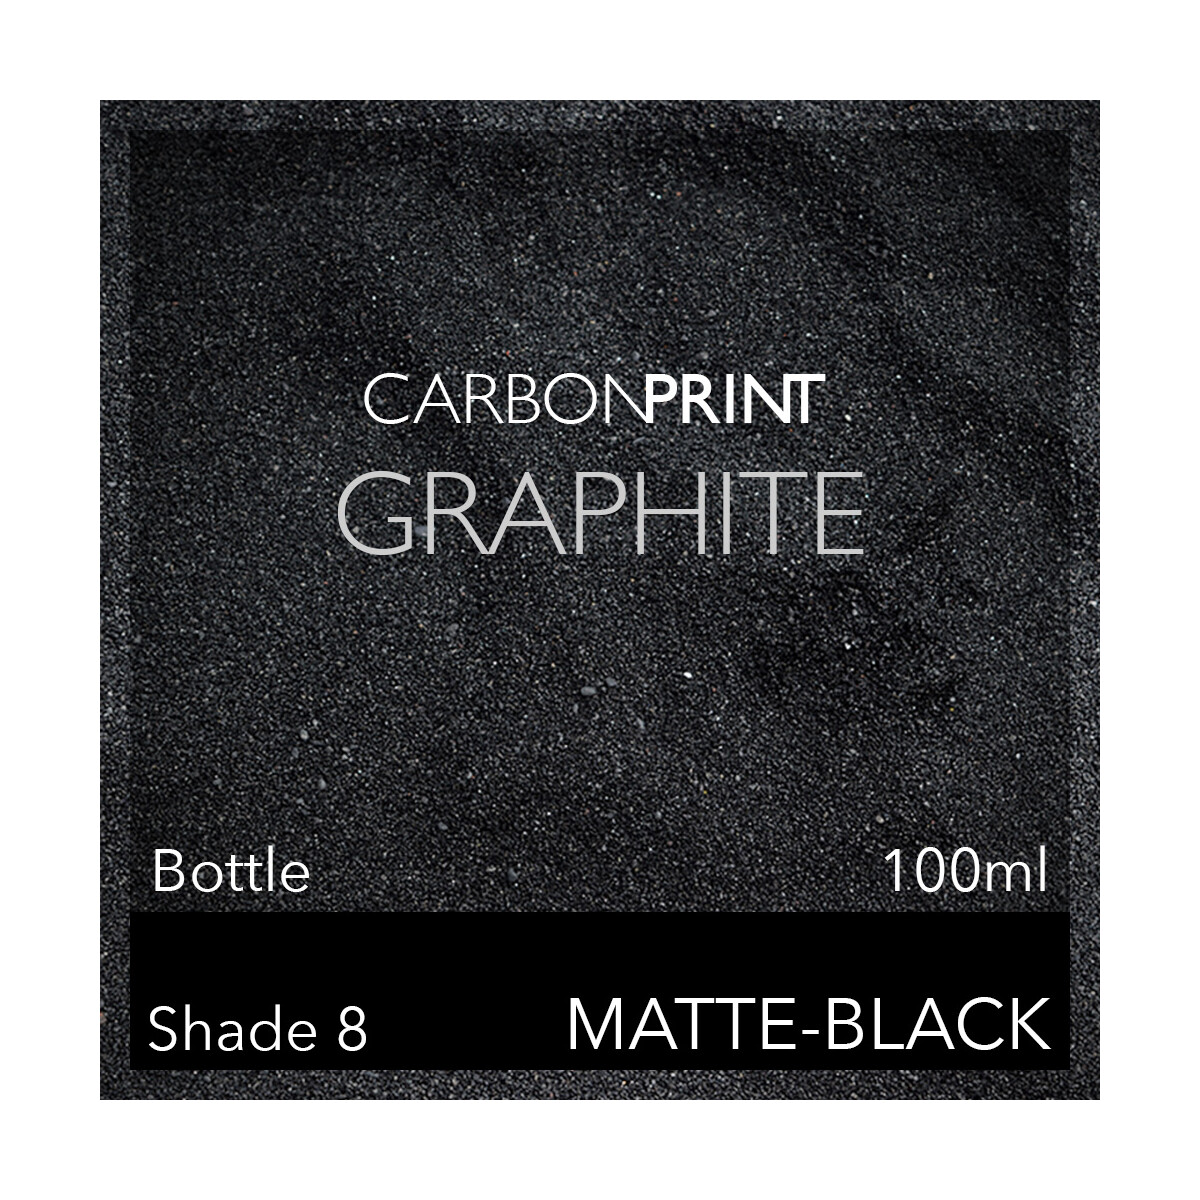 Carbonprint Graphite Shade8 Channel MK 100ml